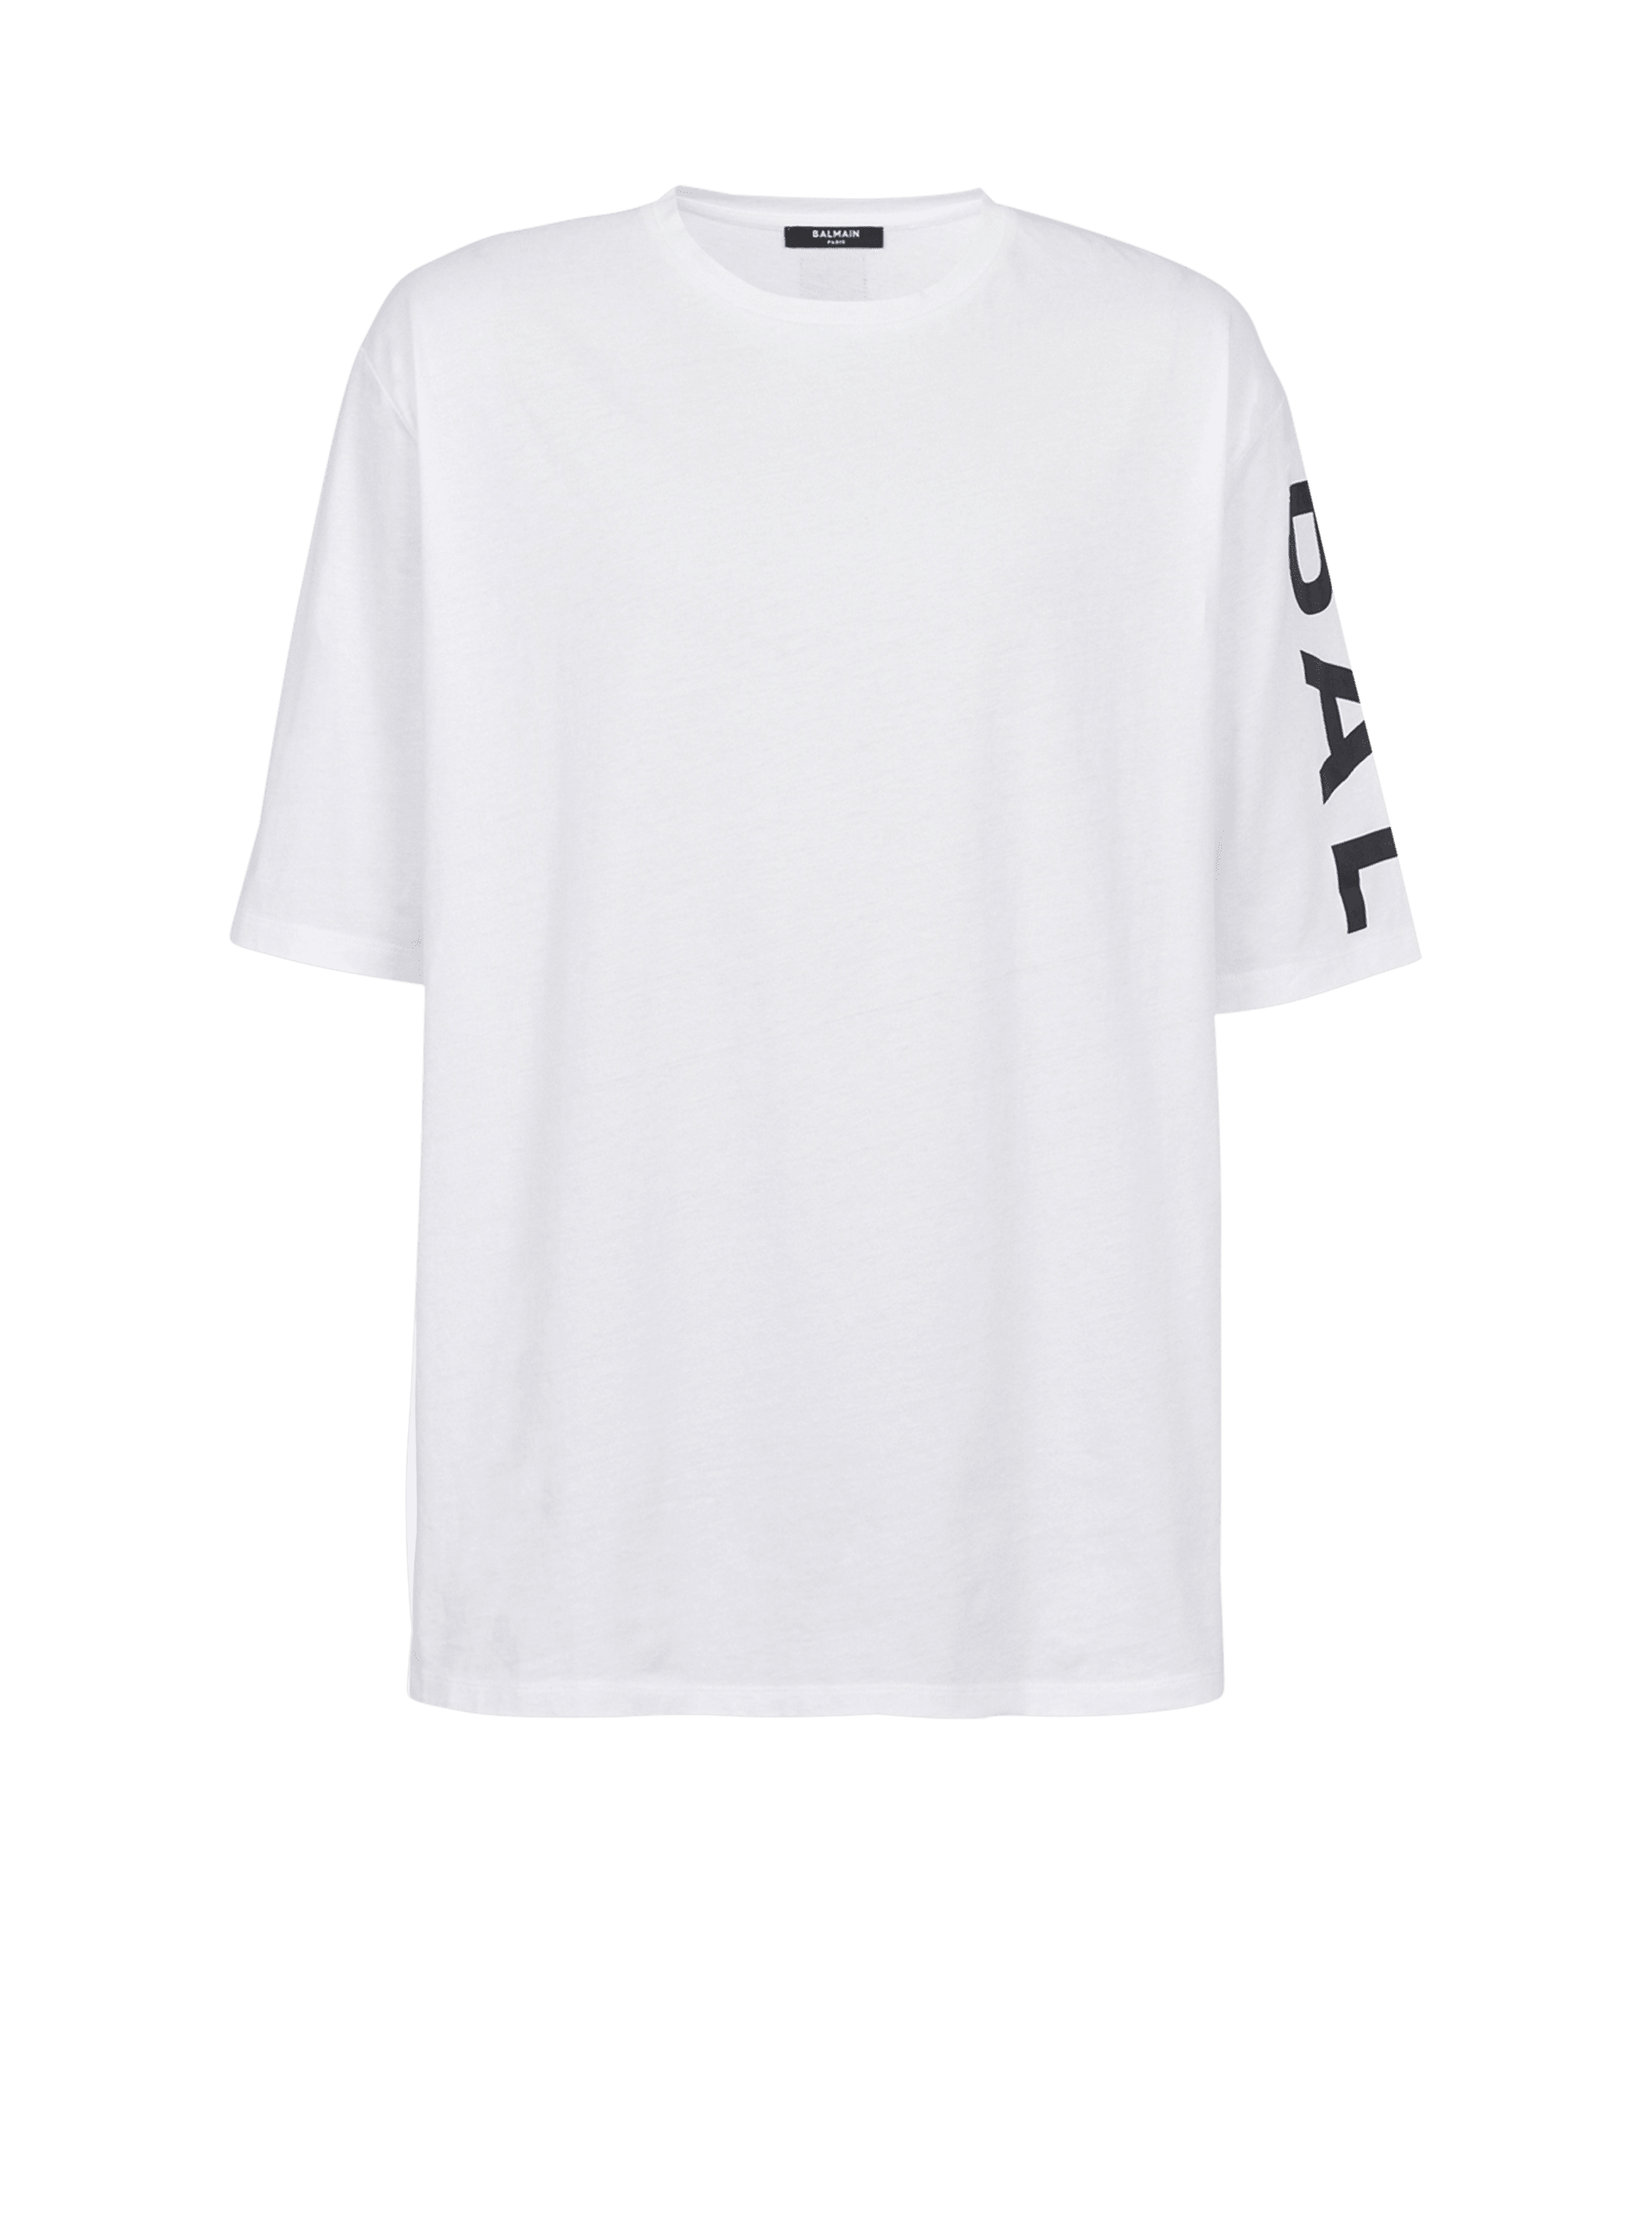 Oversized eco-designed cotton T-shirt with Balmain logo print, white, hi-res